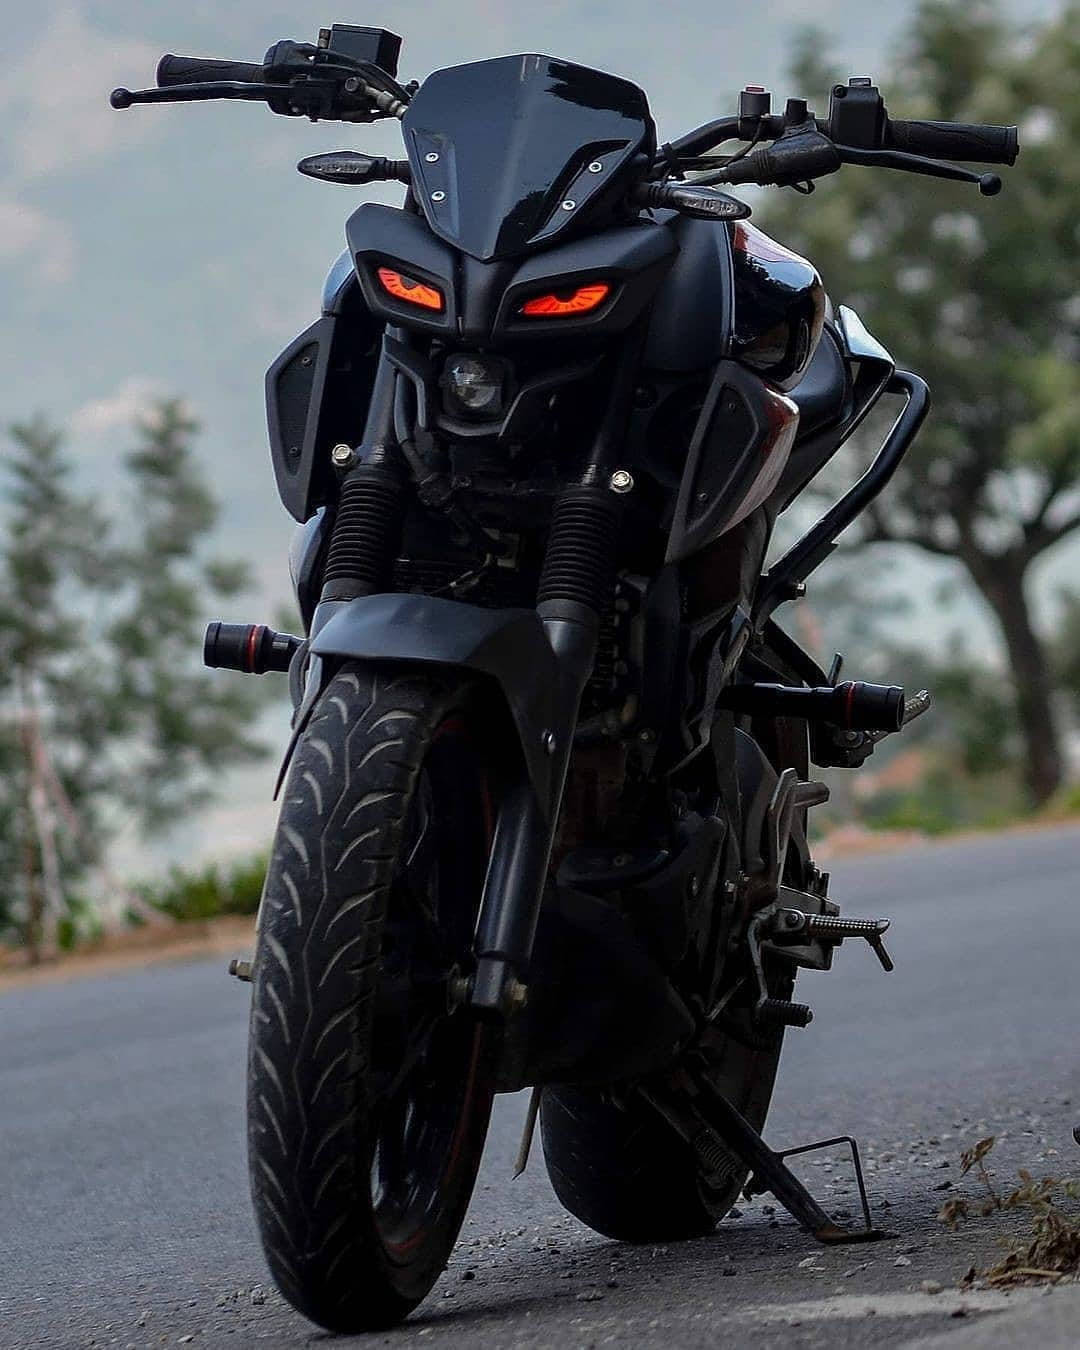 Sleek Yamaha Mt 15 Motorcycle In Action Background